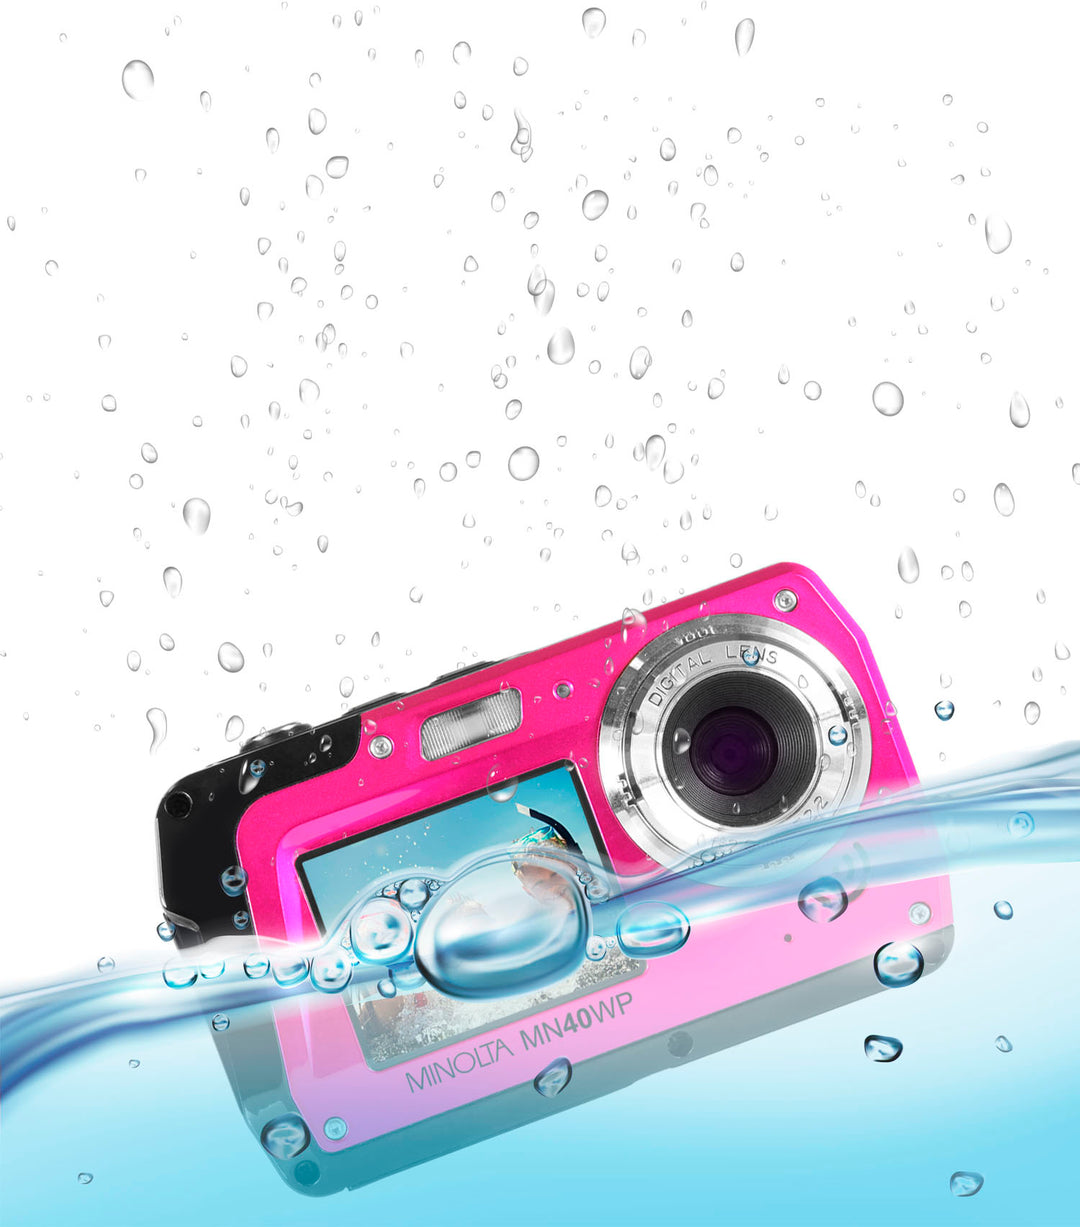 Konica Minolta - MN40WP 48.0 Megapixel Waterproof Digital Camera - Pink_3